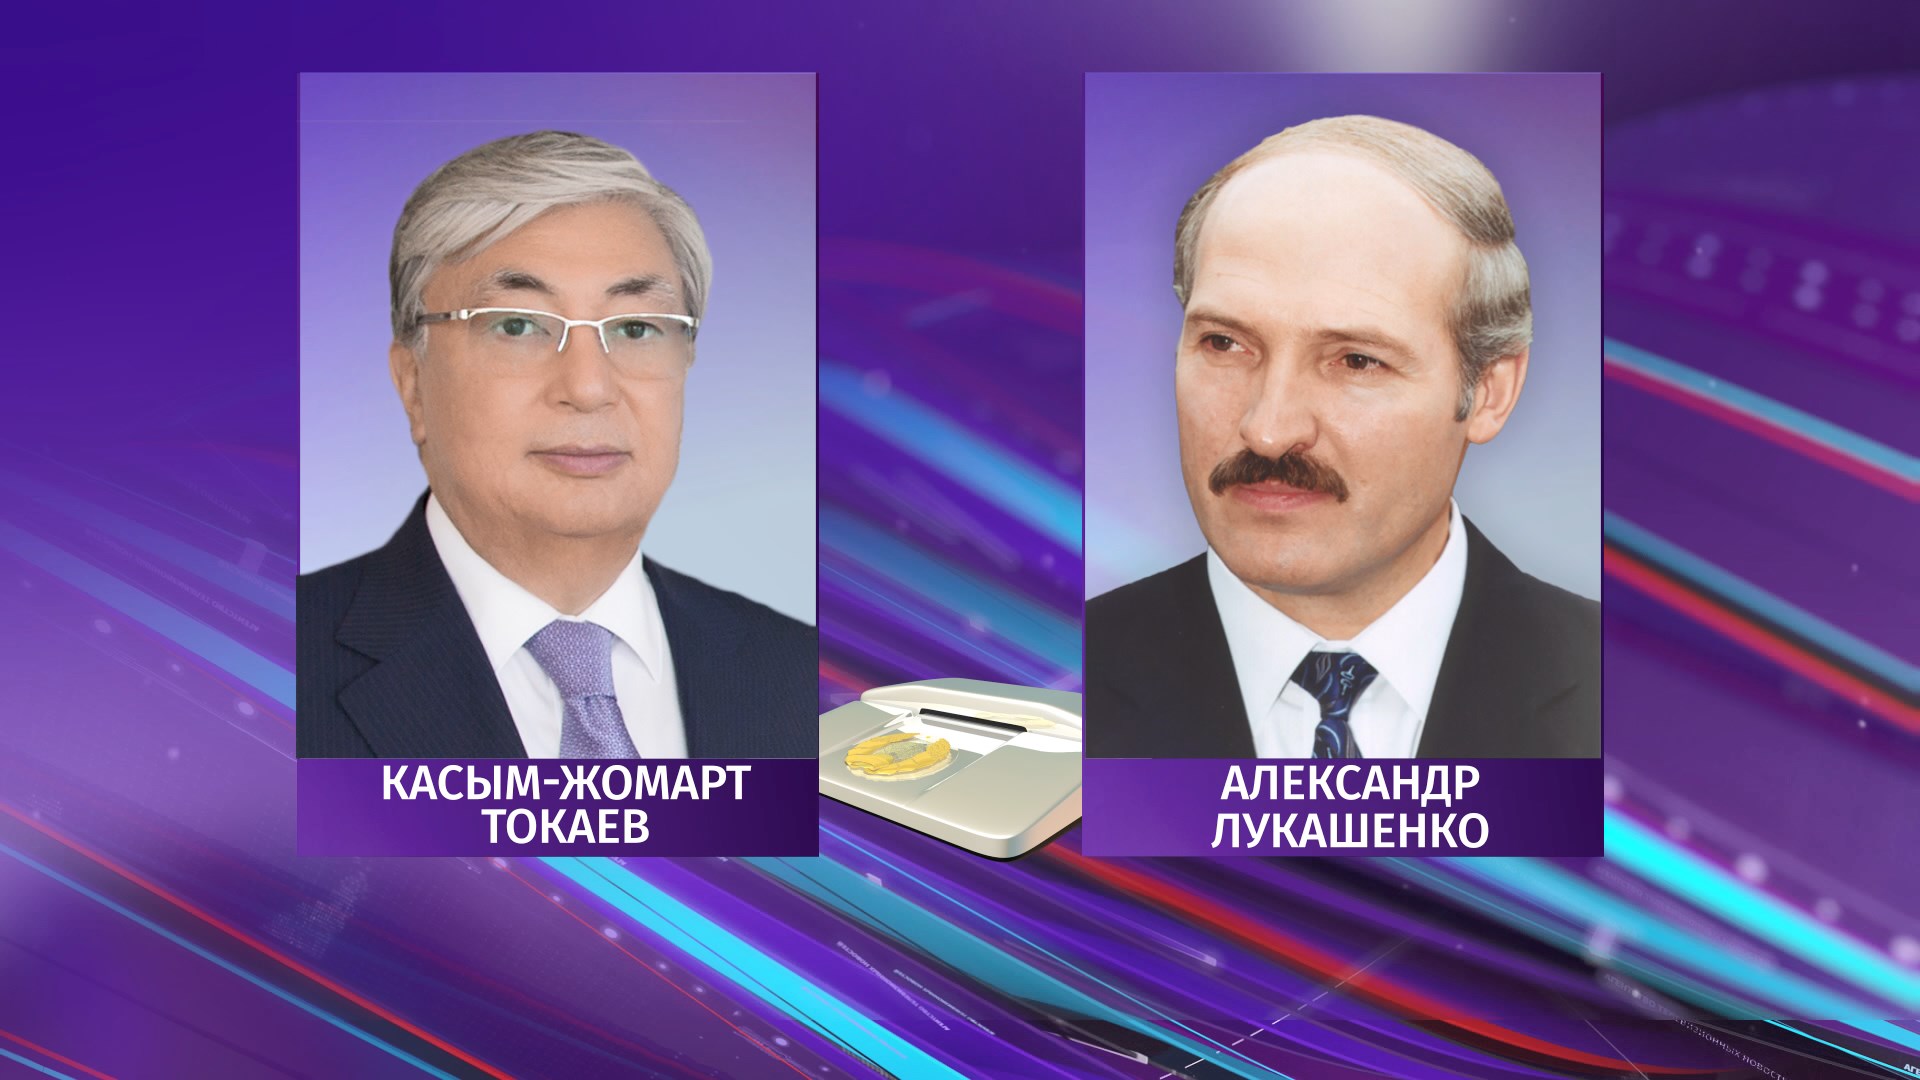 Президенты Беларуси и Казахстана обсудили саммит ЕАЭС, коронавирус и обменялись поздравлениями с юбилеем Победы